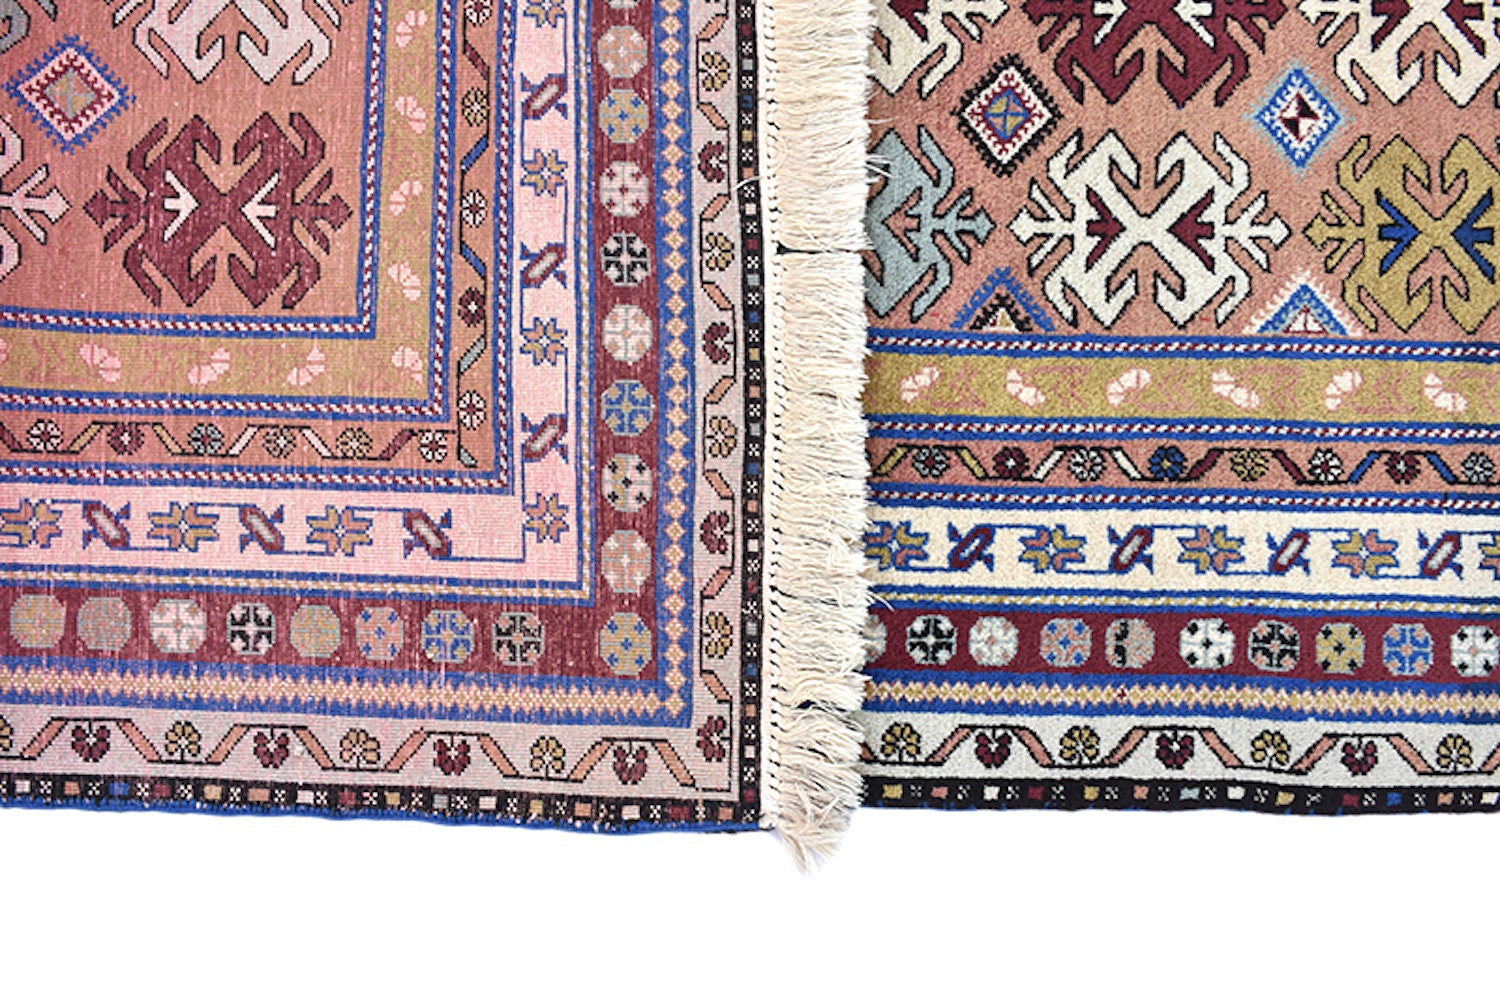 Brown Persian 5 x 8 Rug | MultiColor Floral Antique Rug | Tribal Vintage Rug | Handwoven Rug Wool | Earth Toned Rug